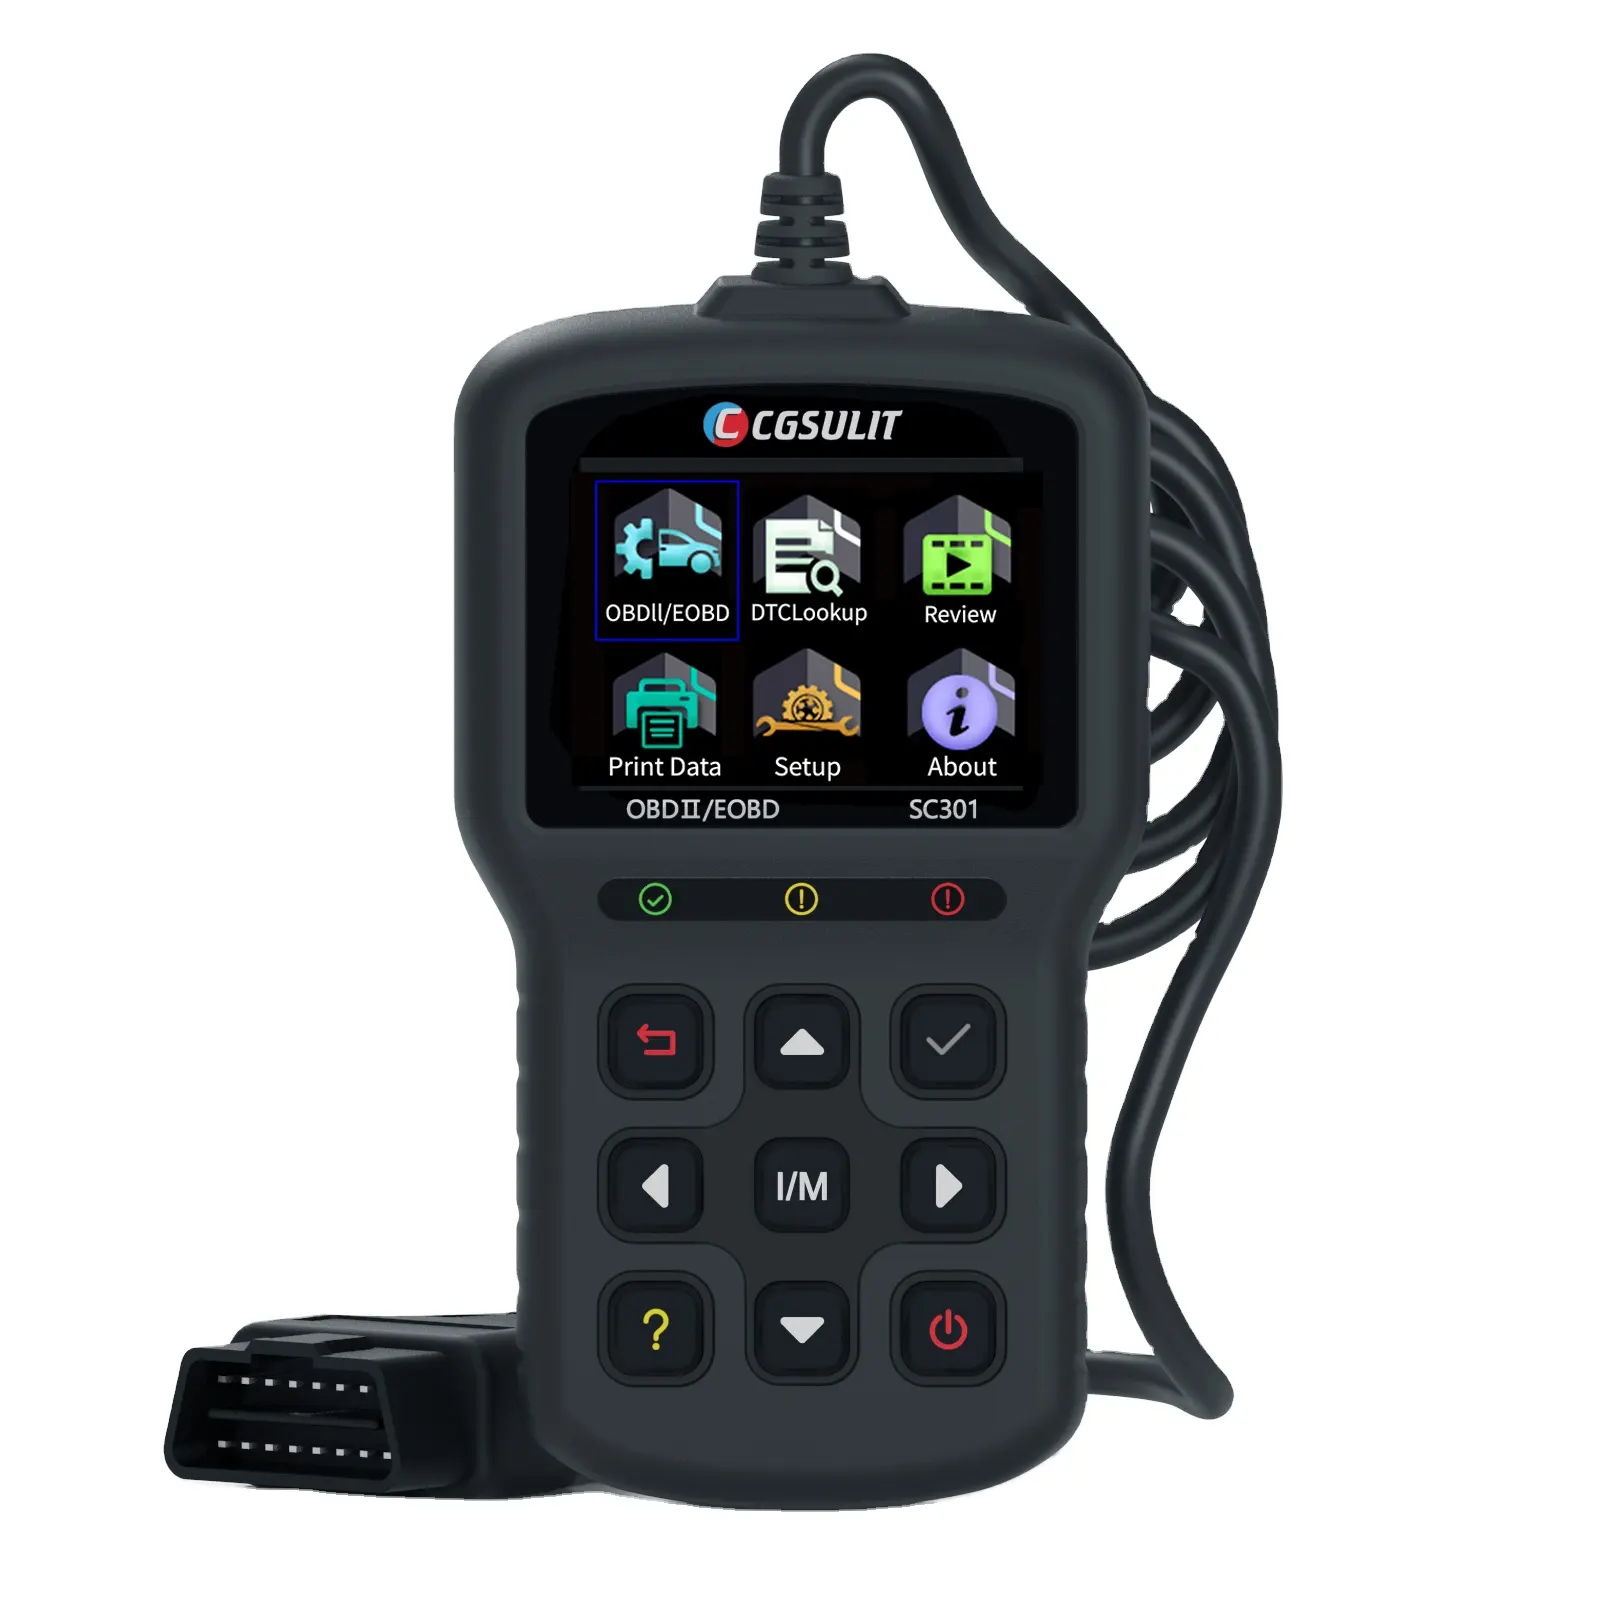 GG SC301 lettore di codici auto outils de diagnostic tool moto scanner universale de voiture automotivo tutti i veicoli automobilistici